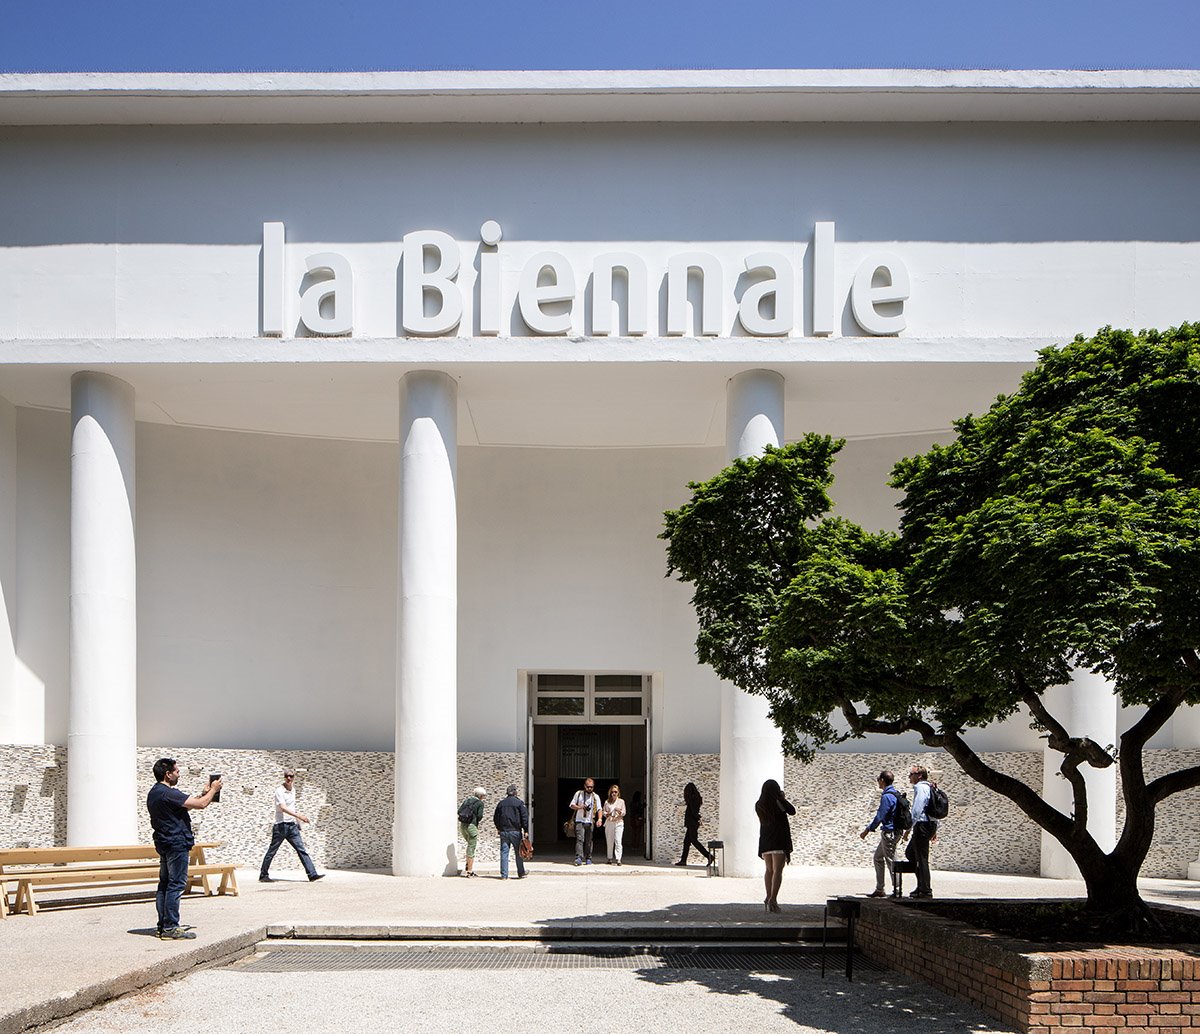 Biennale de Venecia de arquitectura pabellon central